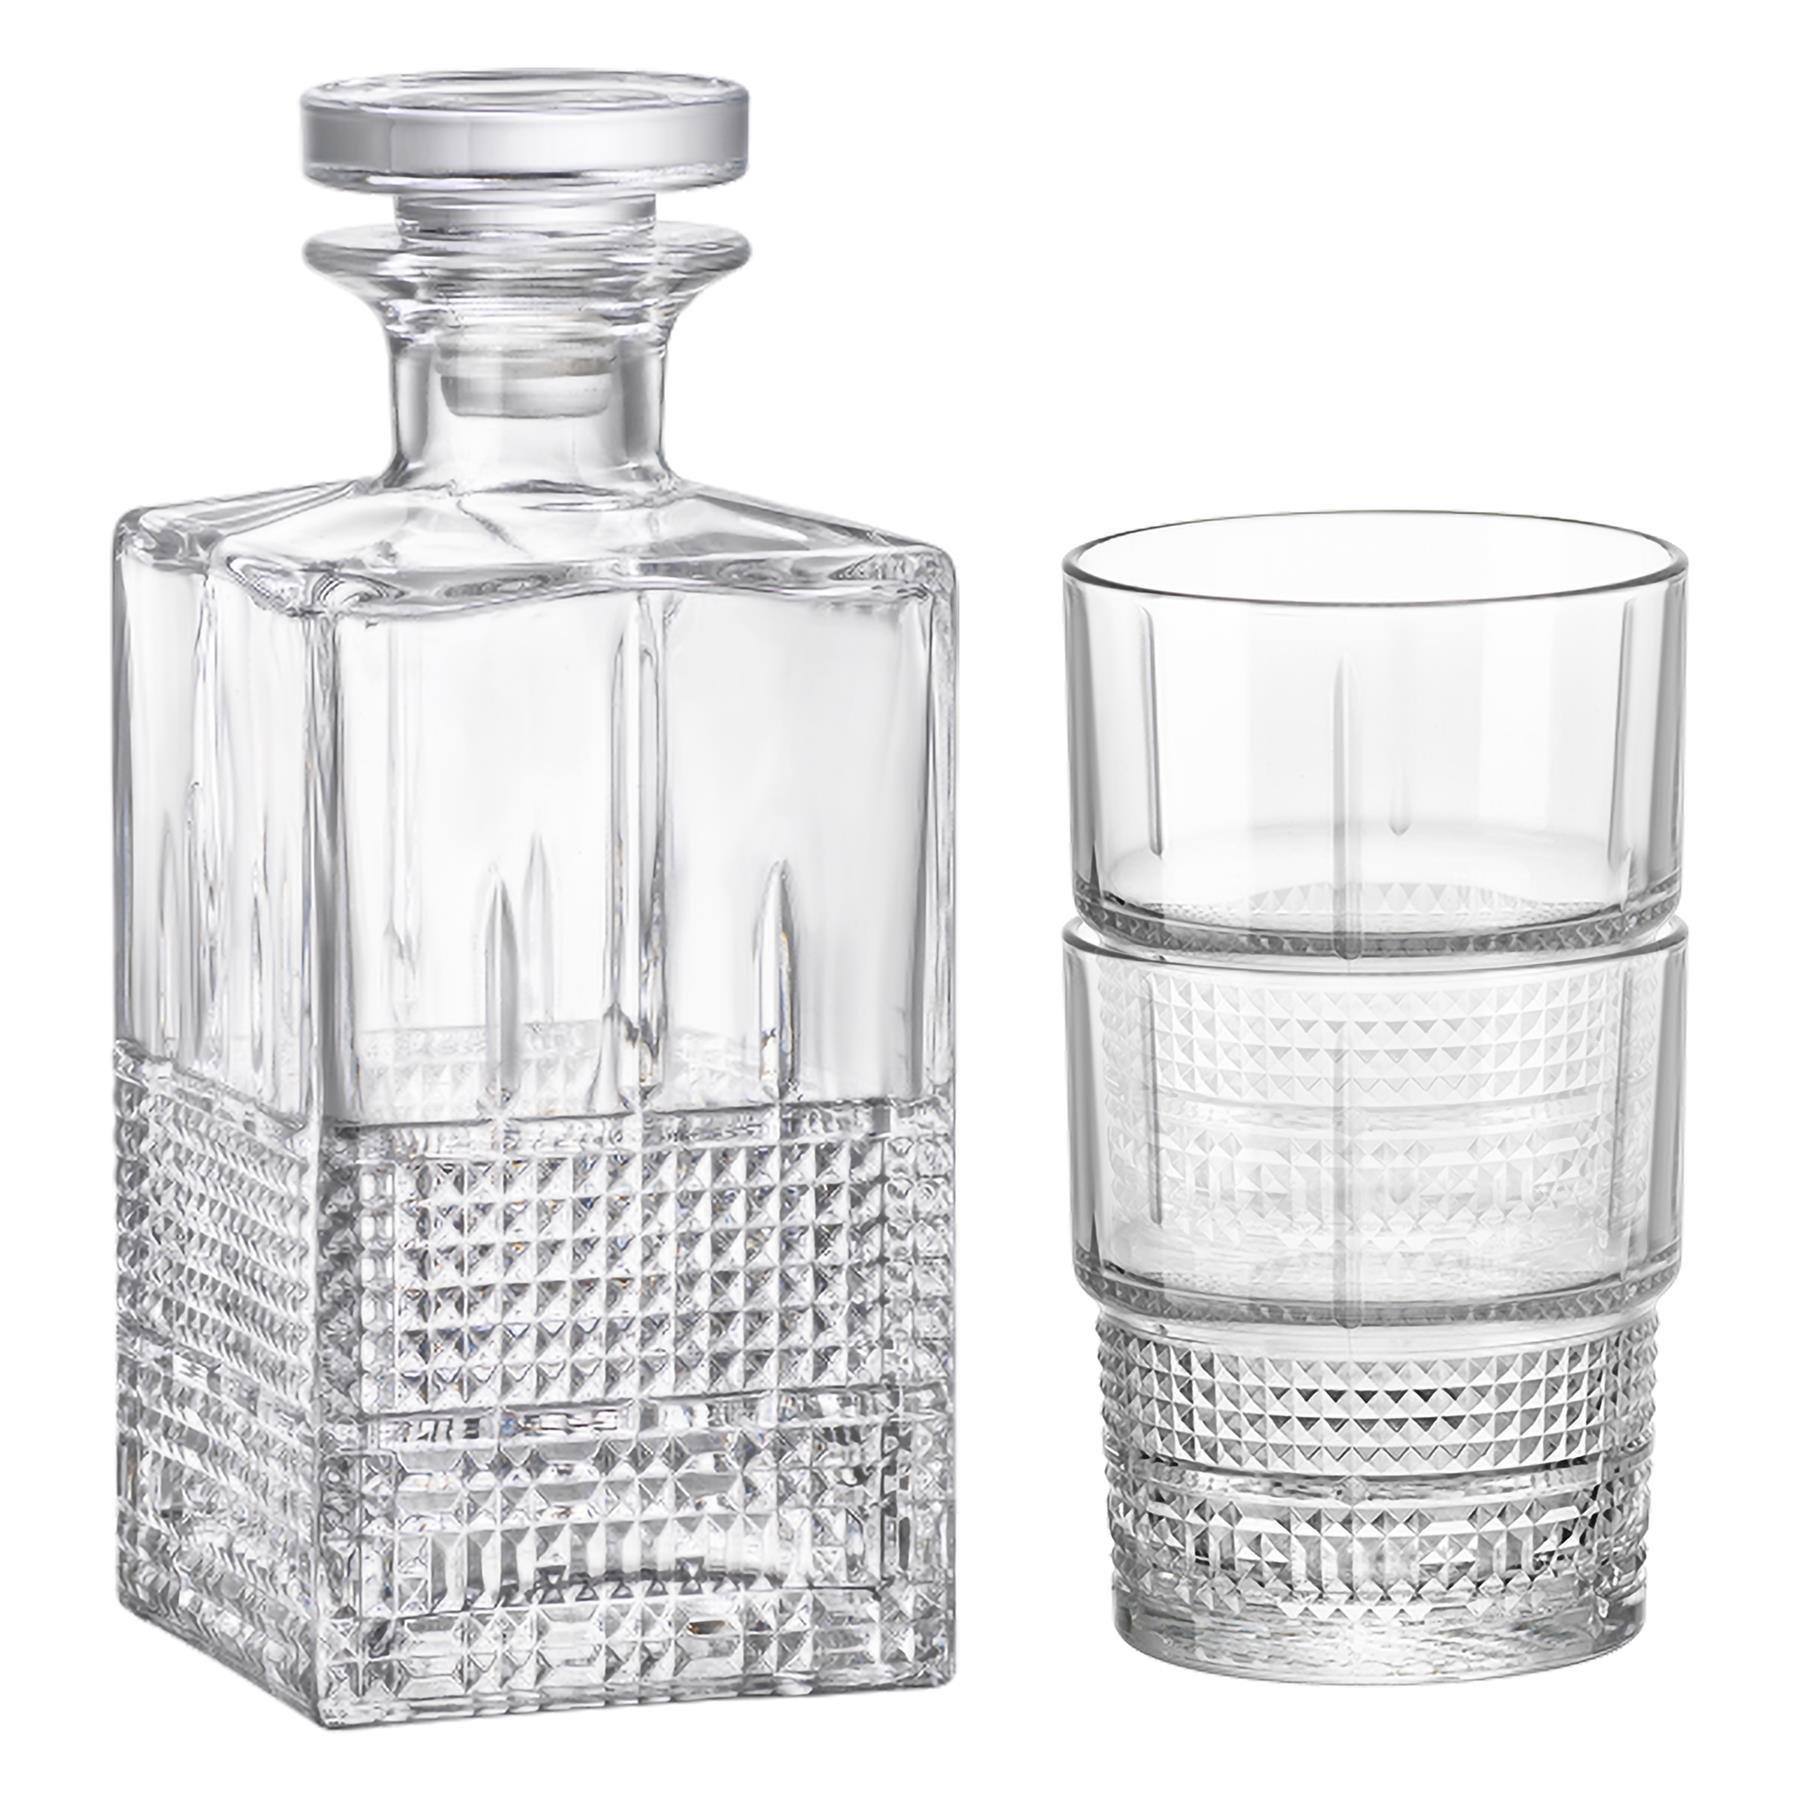 7pc Bartender Novecento Whisky Decanter & Glasses Set | By Bormioli Rocco